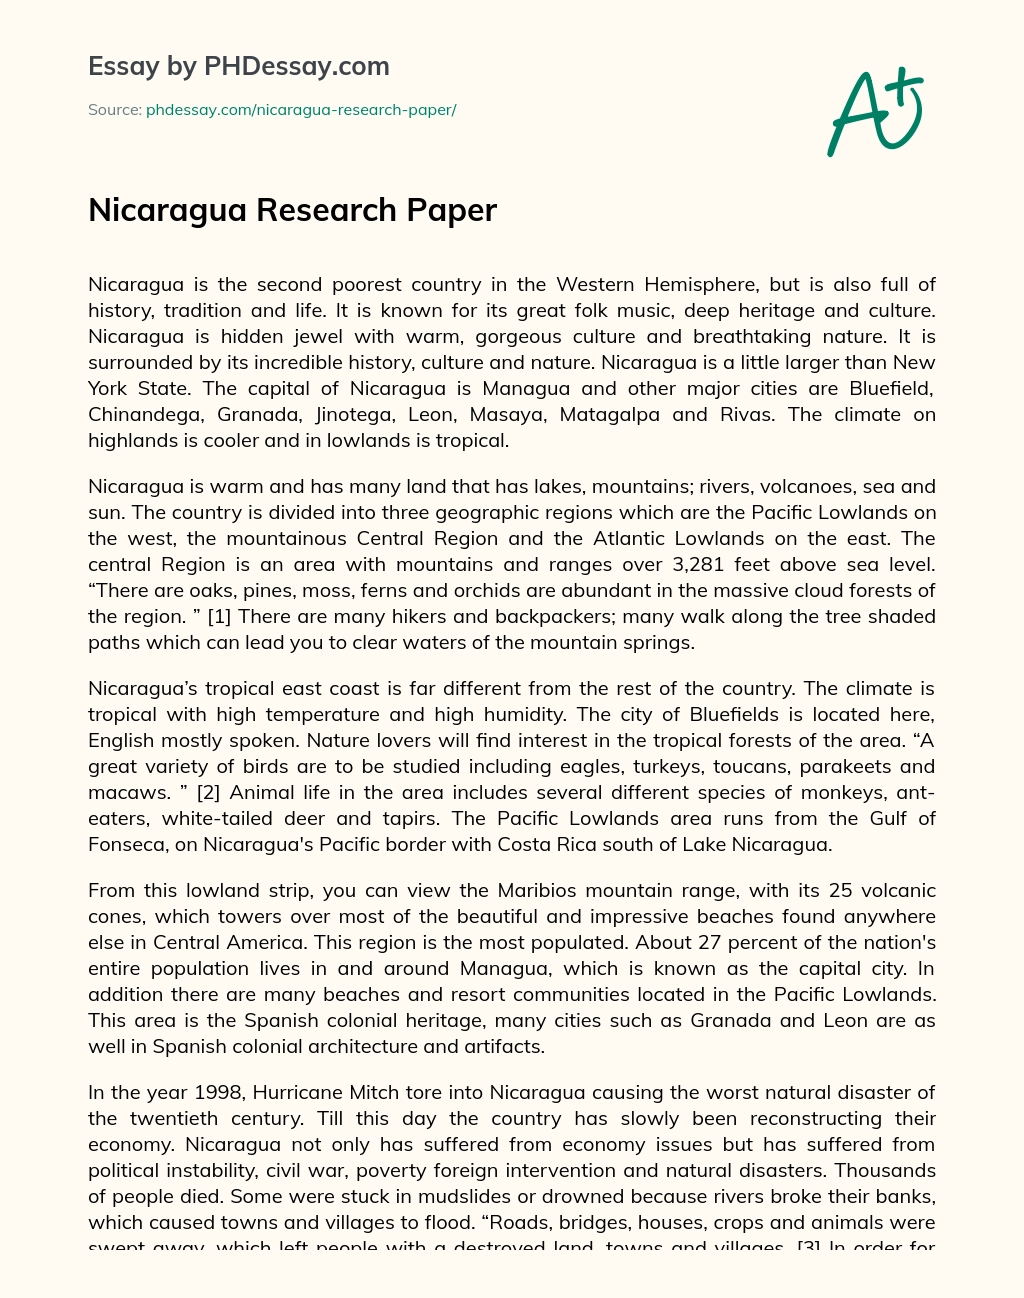 Nicaragua Research Paper essay